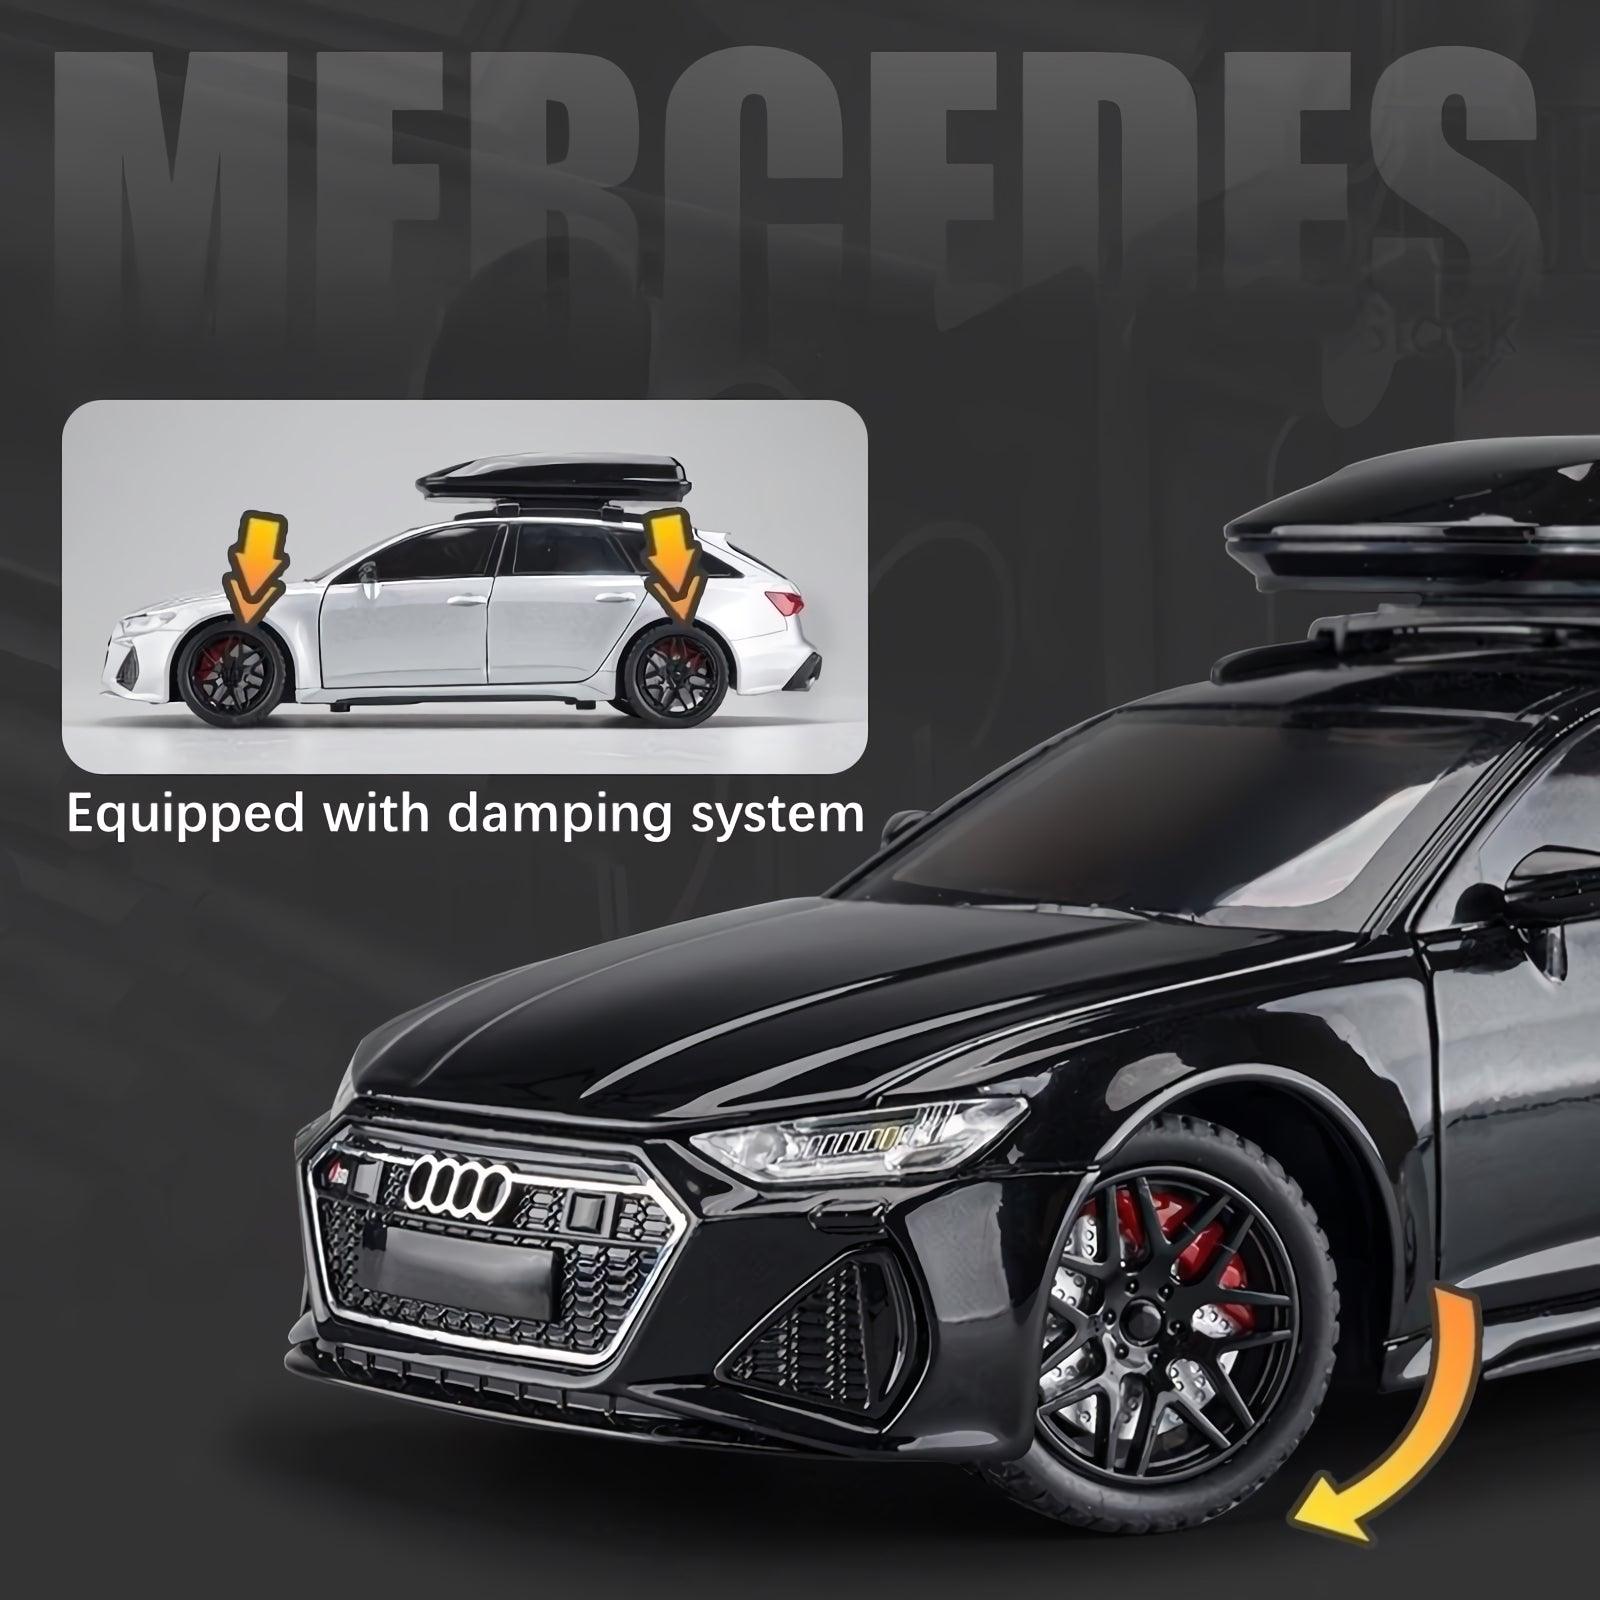 1:24 Scale Audi RS6 Alloy Car Model Toy - Precision Craftsmanship Meets Automotive Excellence - PANSEKtoy